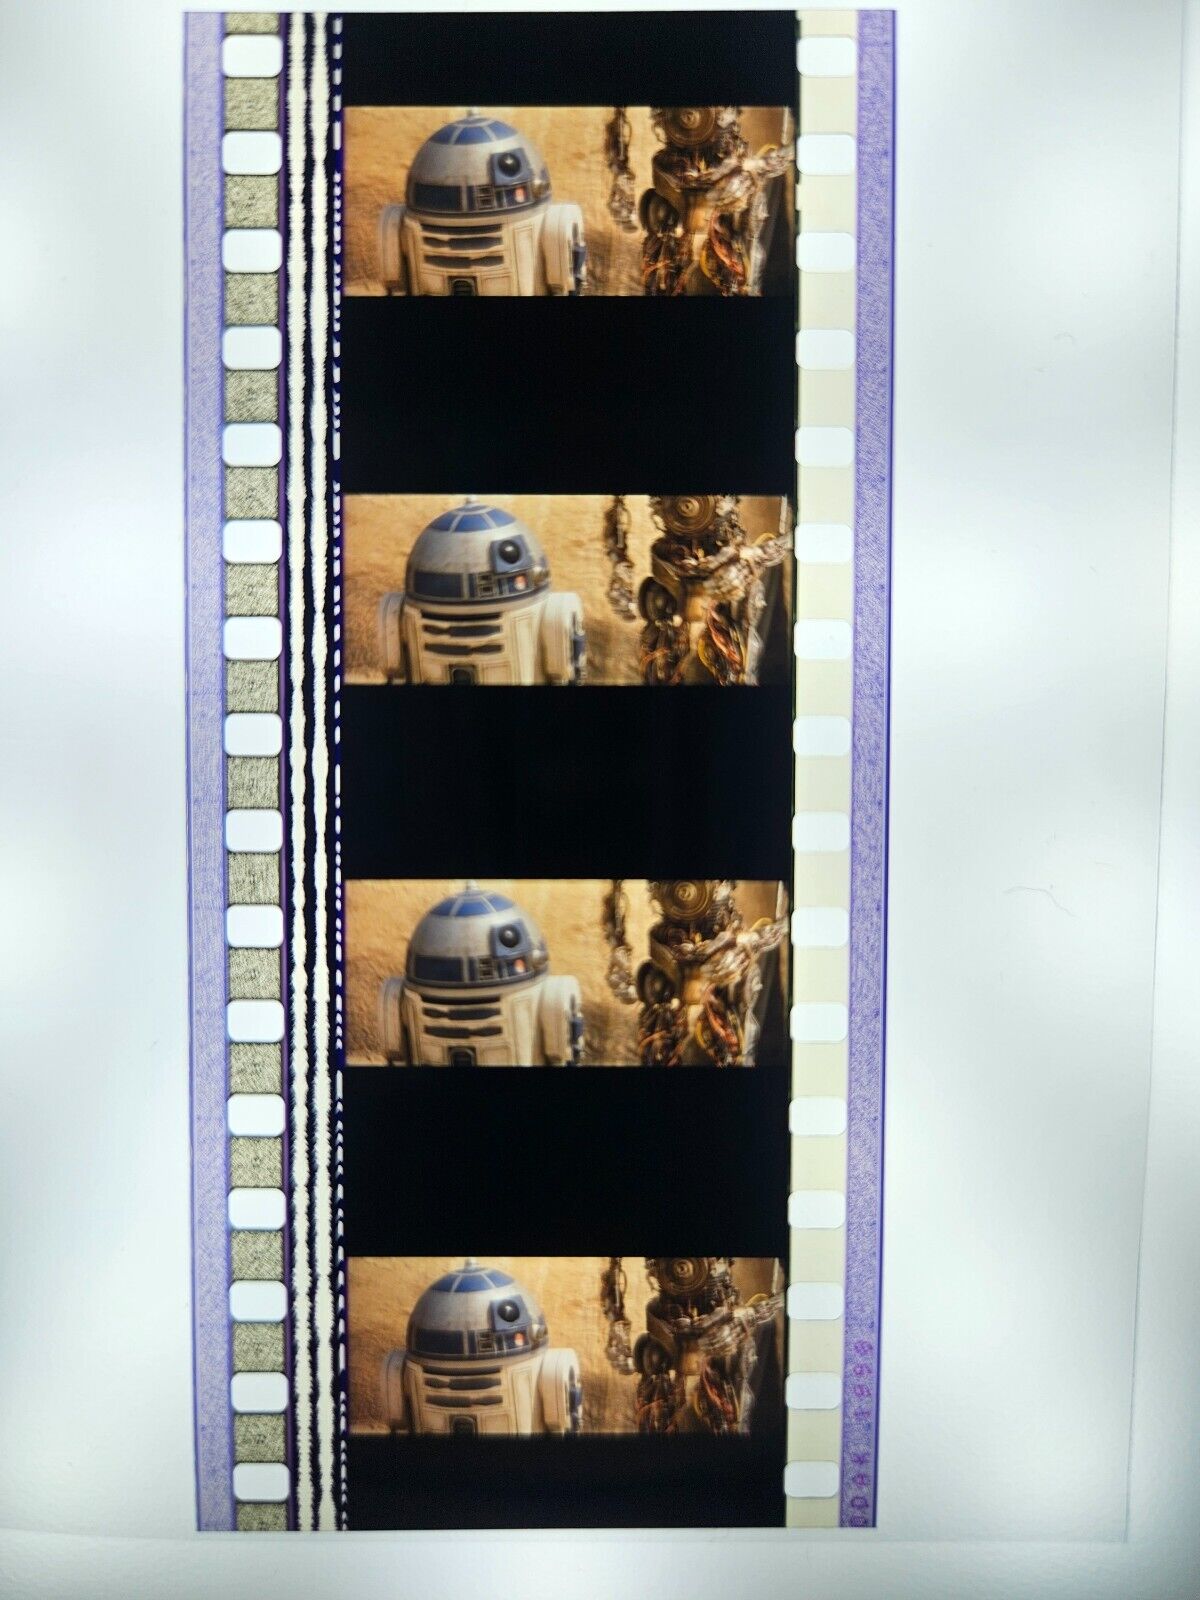 R2-D2 C-3PO Star Wars Episode 1 Phantom Menace 35mm Original Film Cells SW2096 Star Wars 35mm Film Cell - Hobby Gems